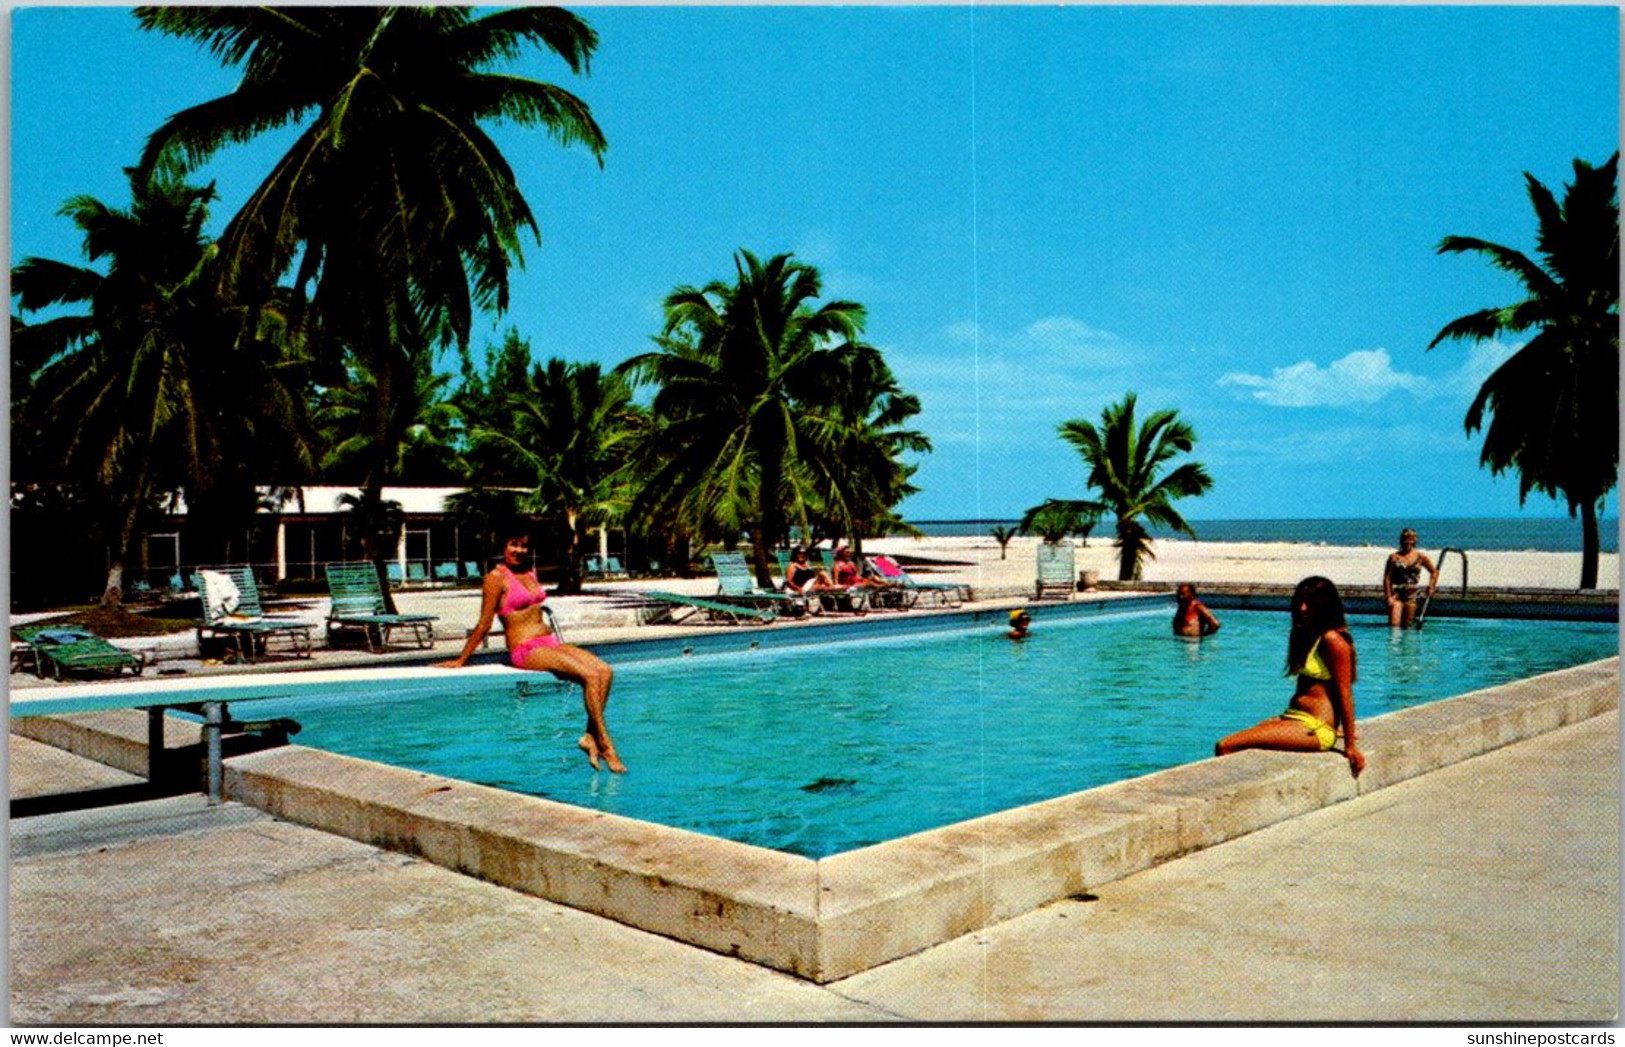 Florida Keys Islamorada The Islander Resort Swimming Pool - Key West & The Keys